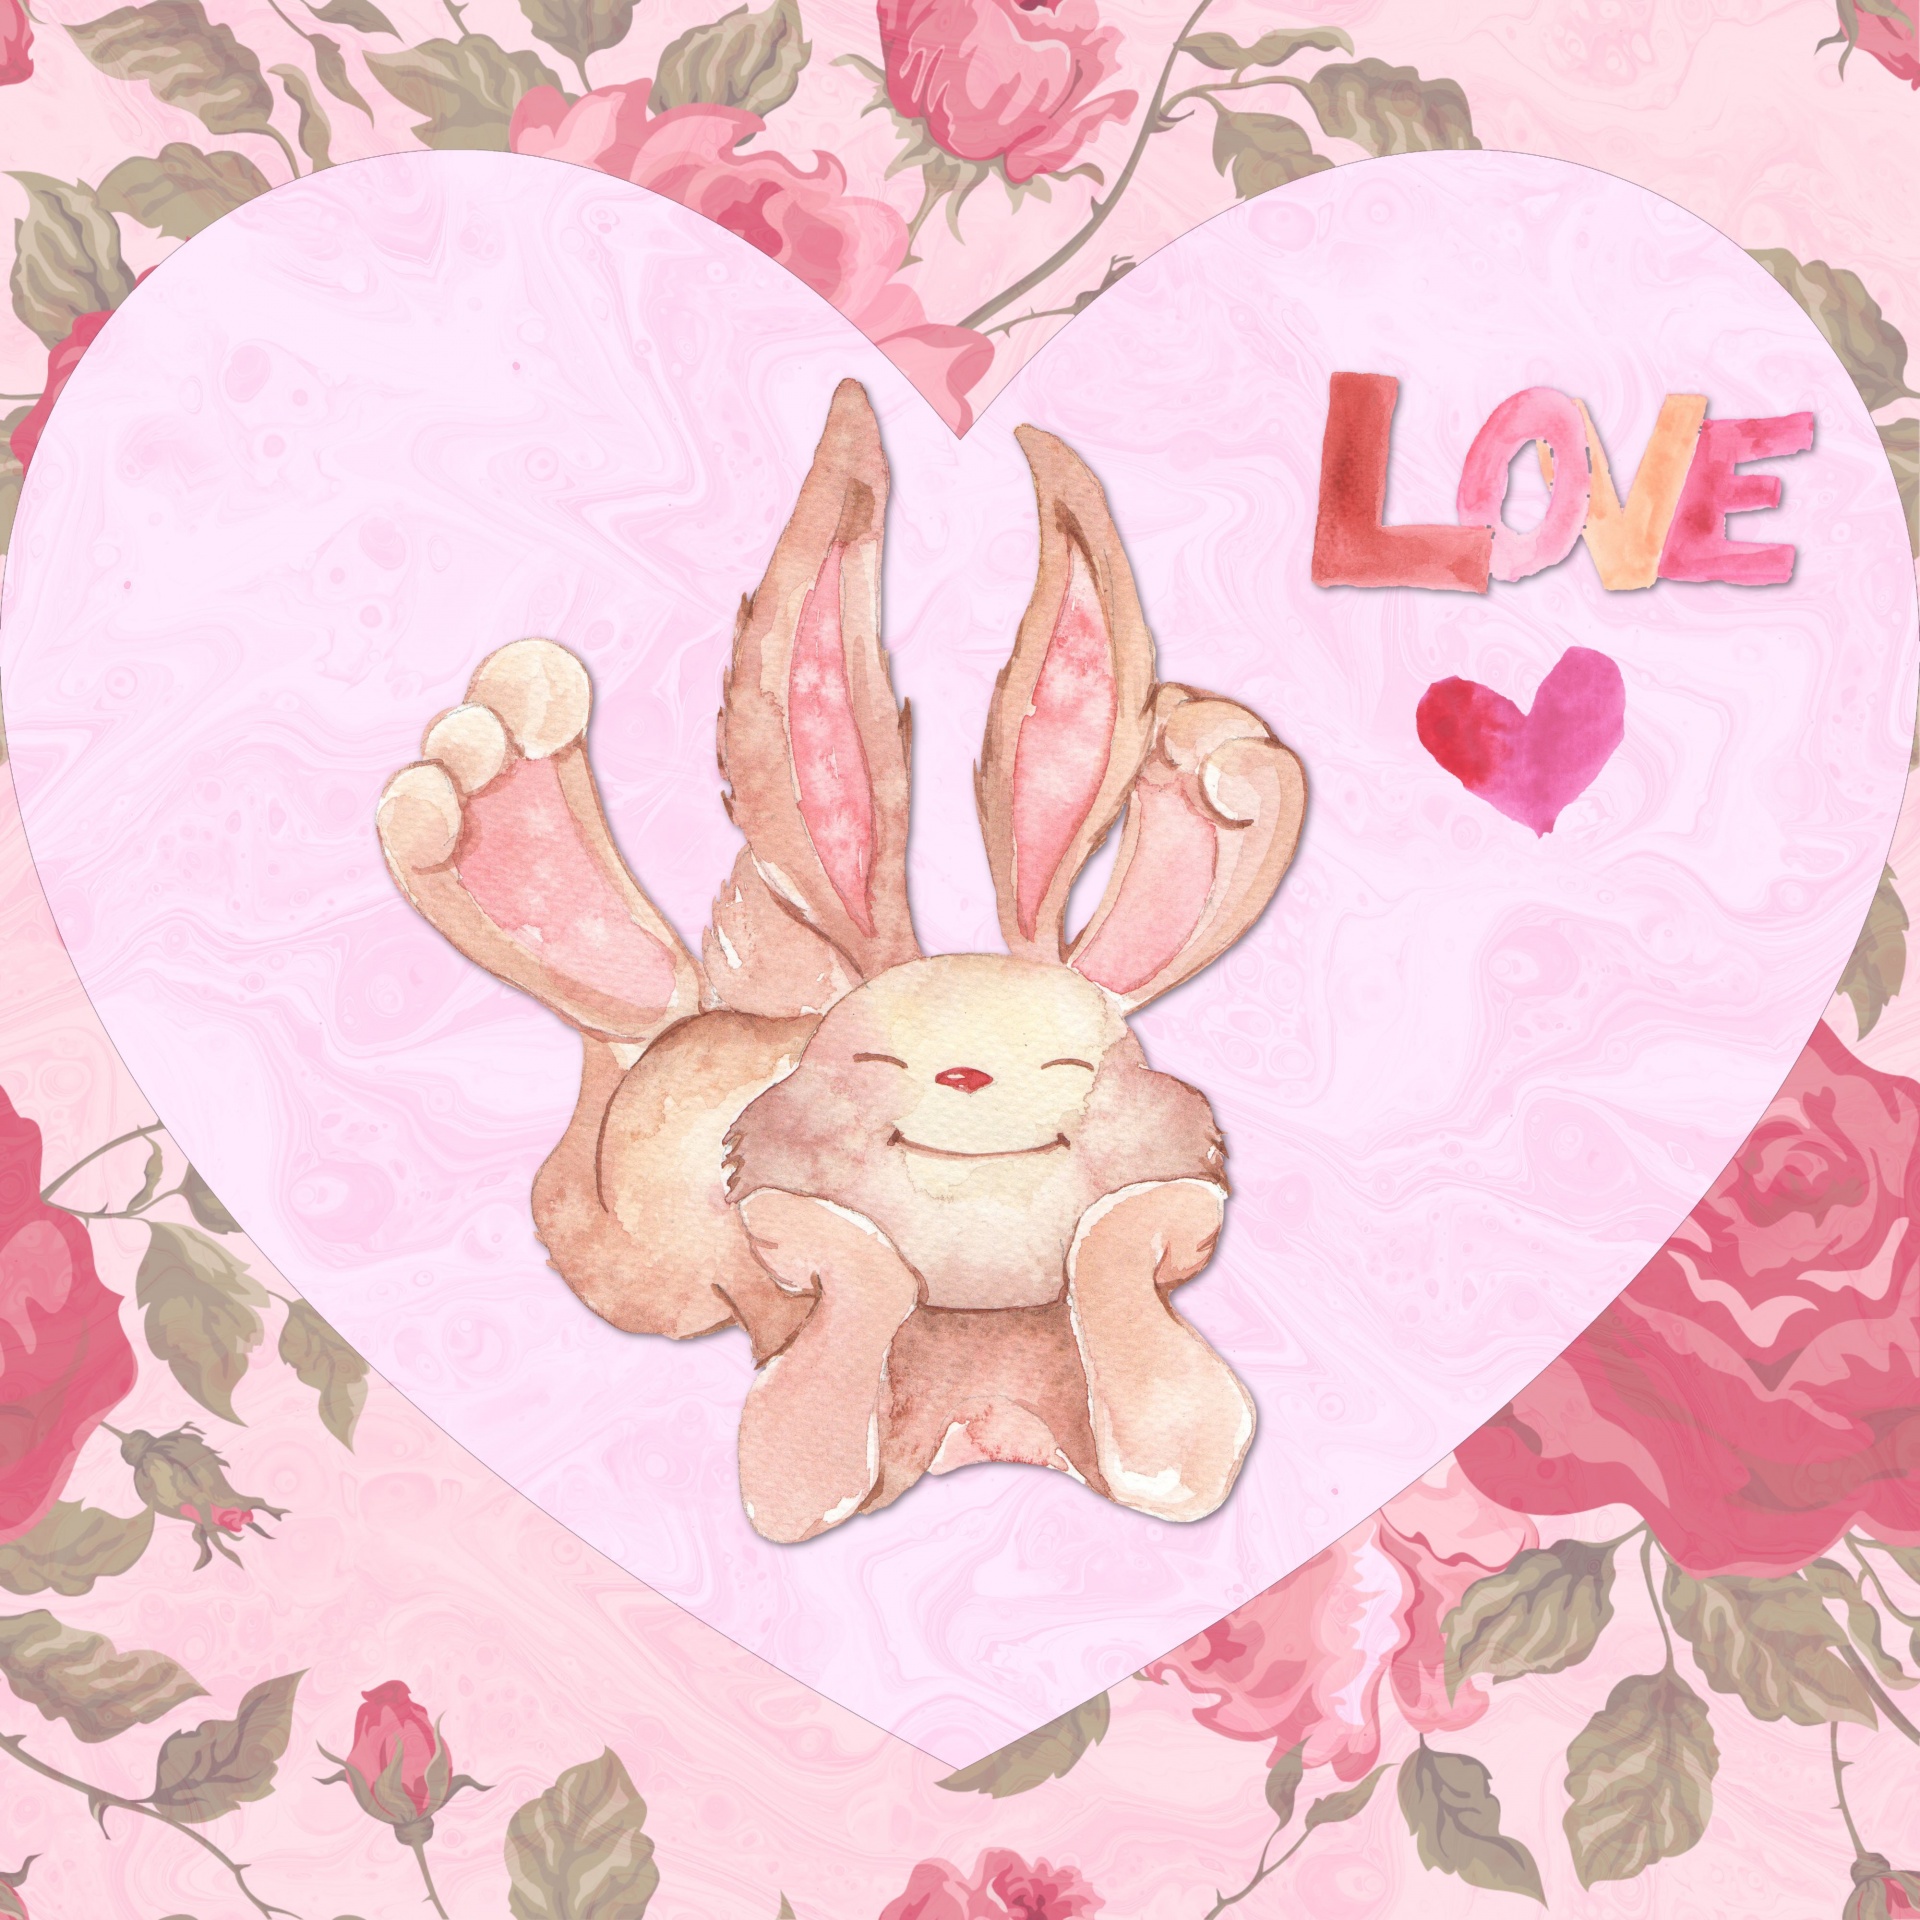 Bunny pictures valentine 20+ Free